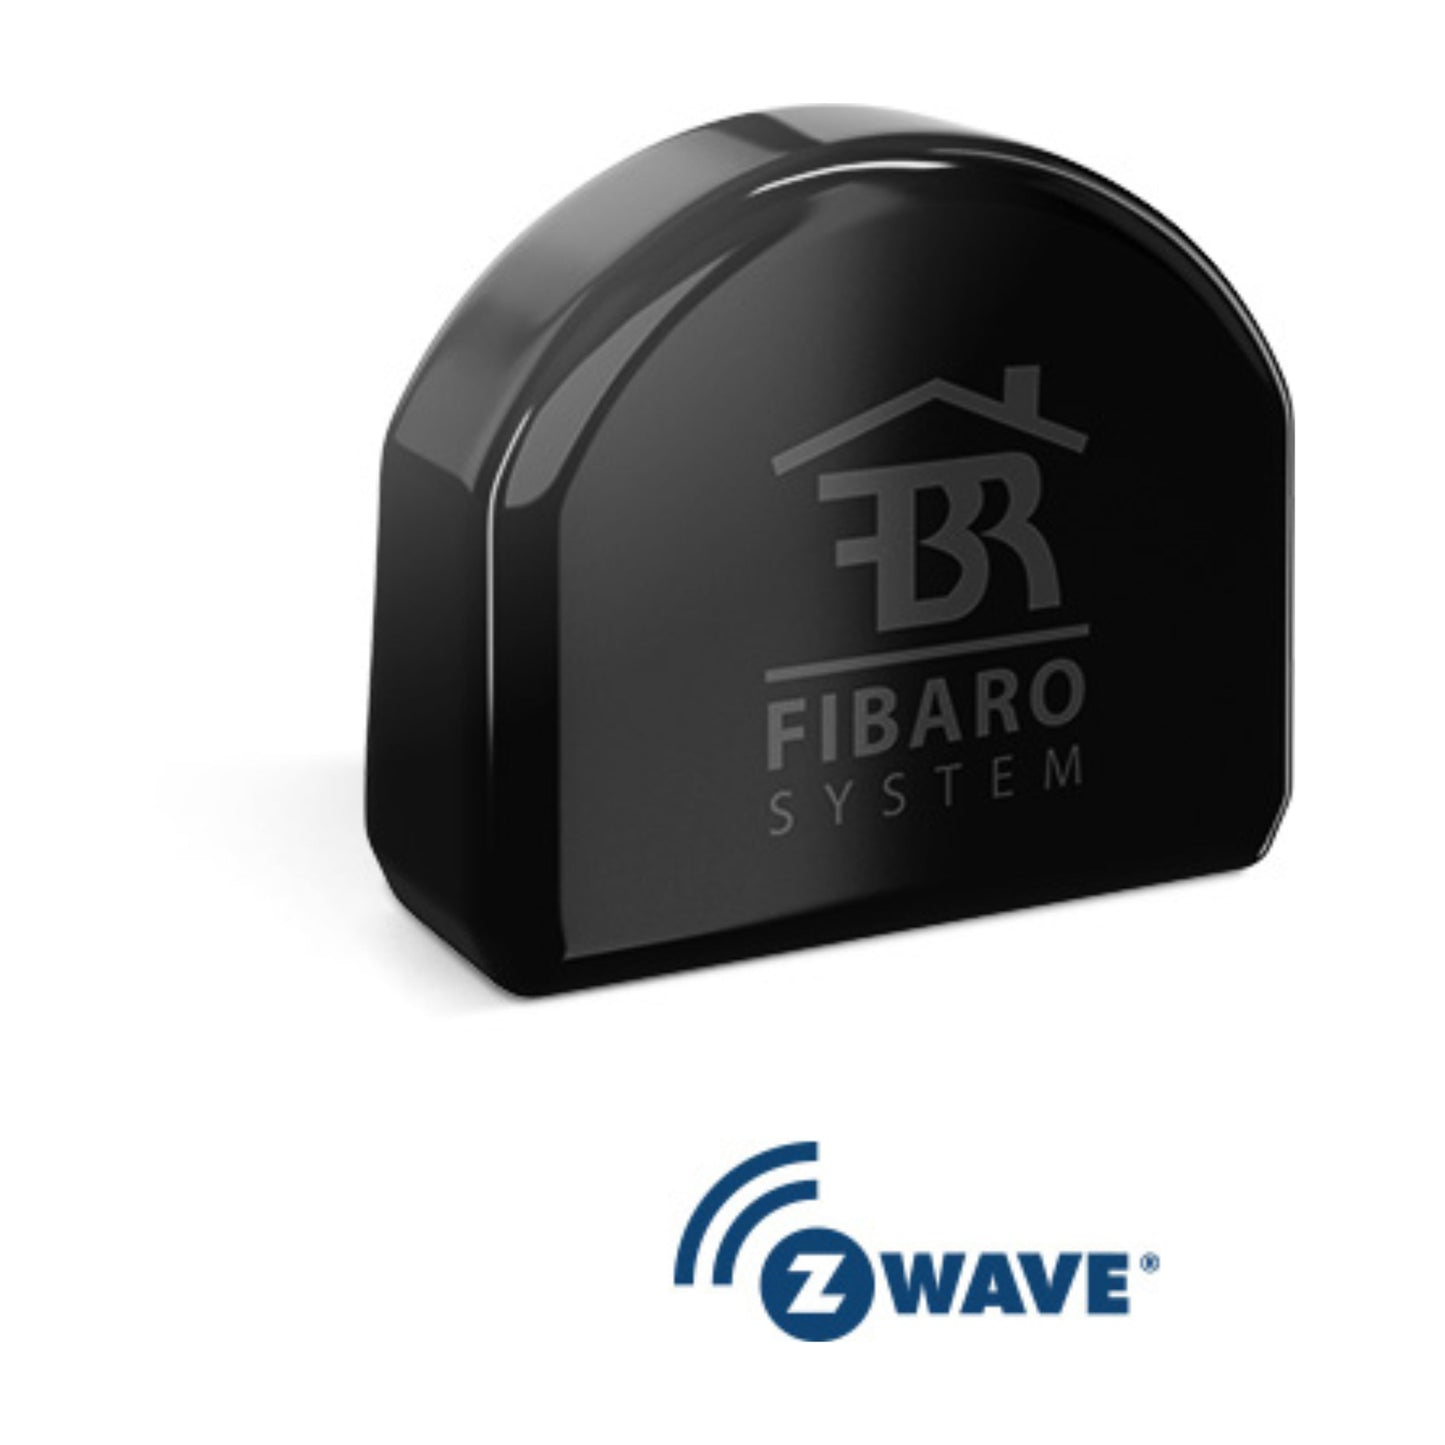 Fibaro Double Switch 2 with z wave symbol